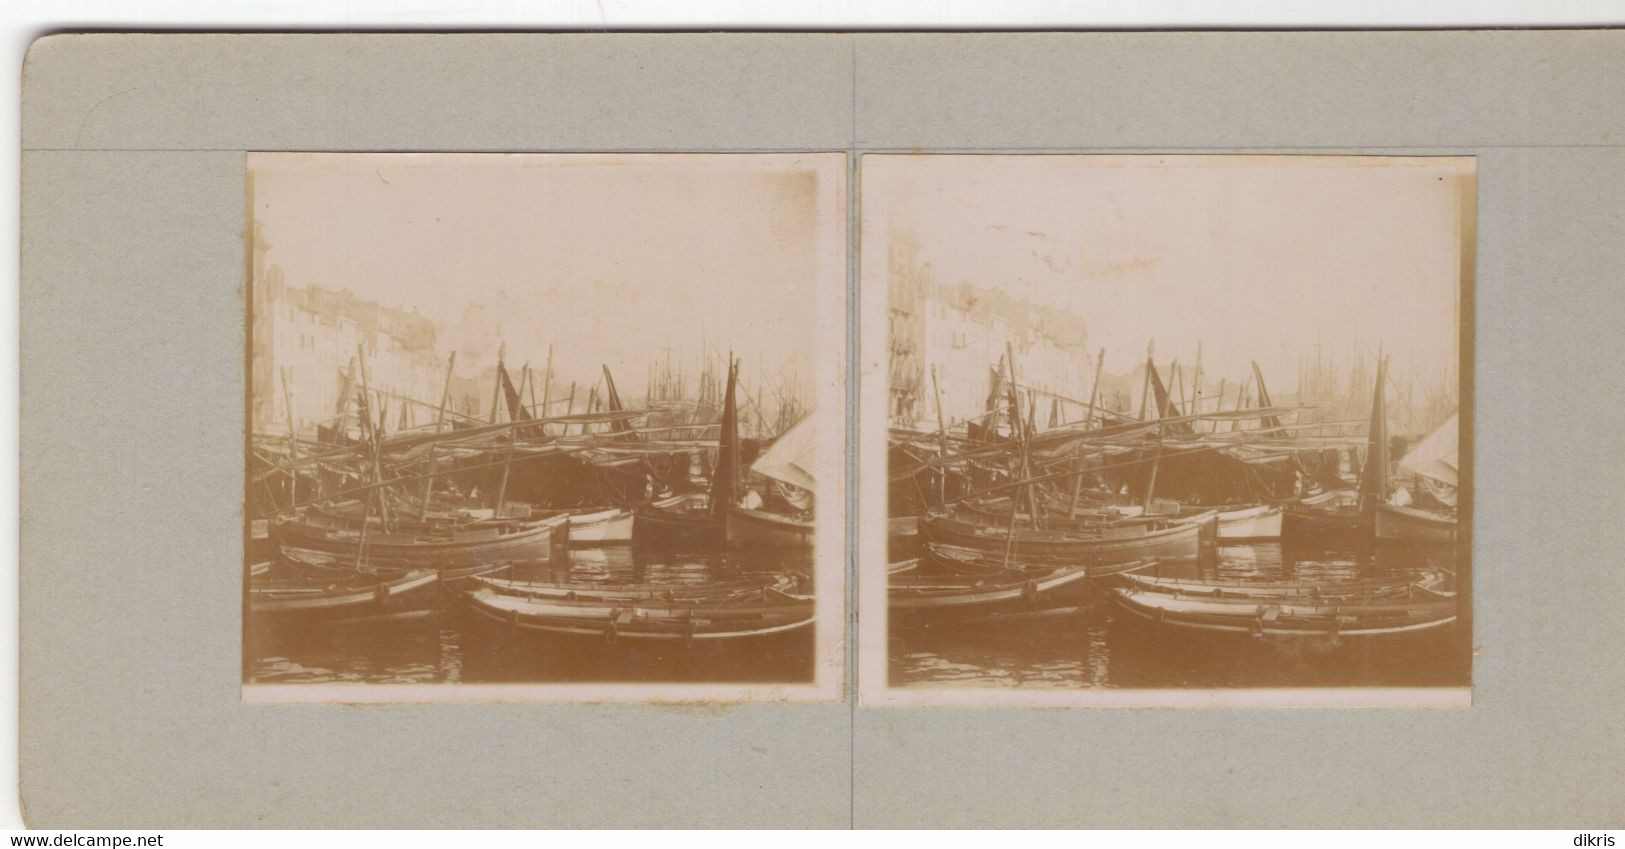 PHOTO-STEREO- 13- MARSEILLE A-IDENTIFIER  VUE DU PORT -VERS 1870/1880- RECTO-VERSO DIM 17.5X8.5 CM - Stereoscopic